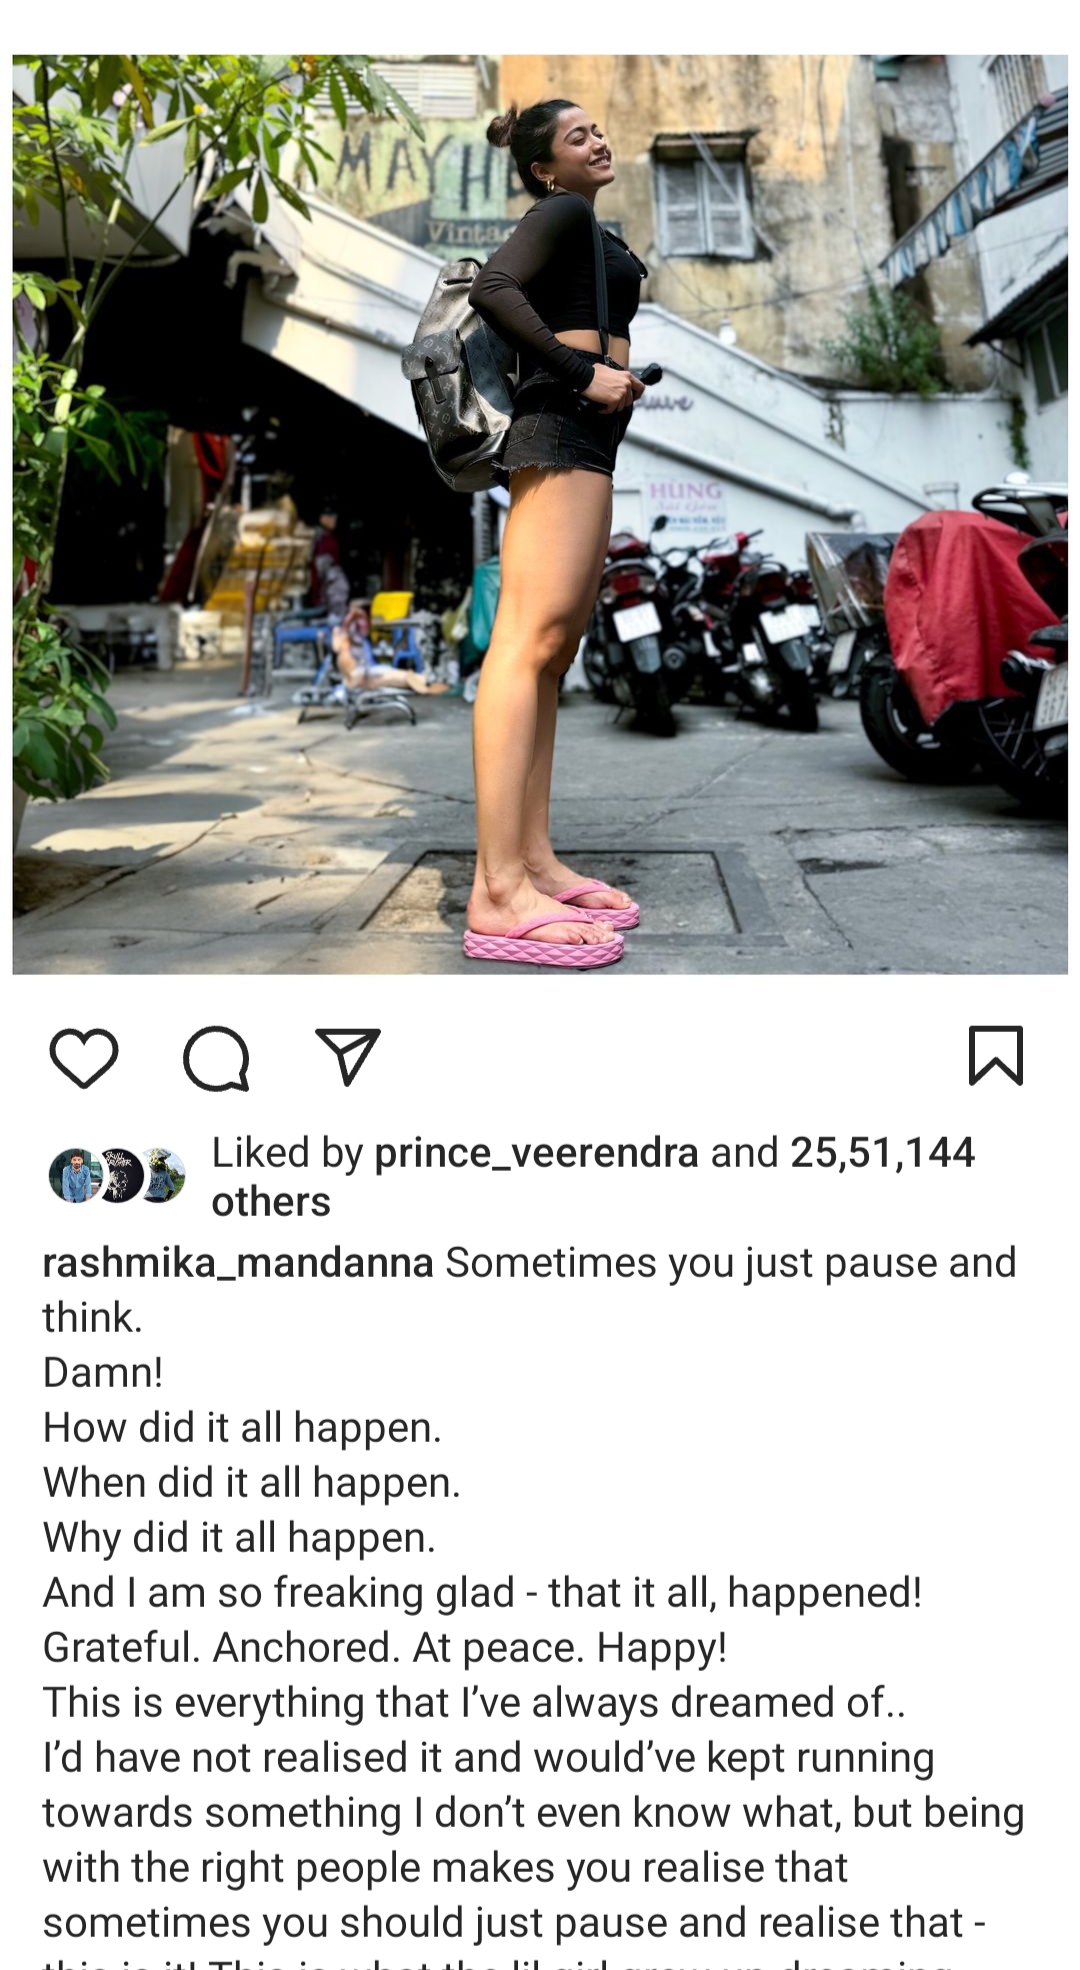 rashmika-mandanna-forgotten-to-wear-pant-in-public-place